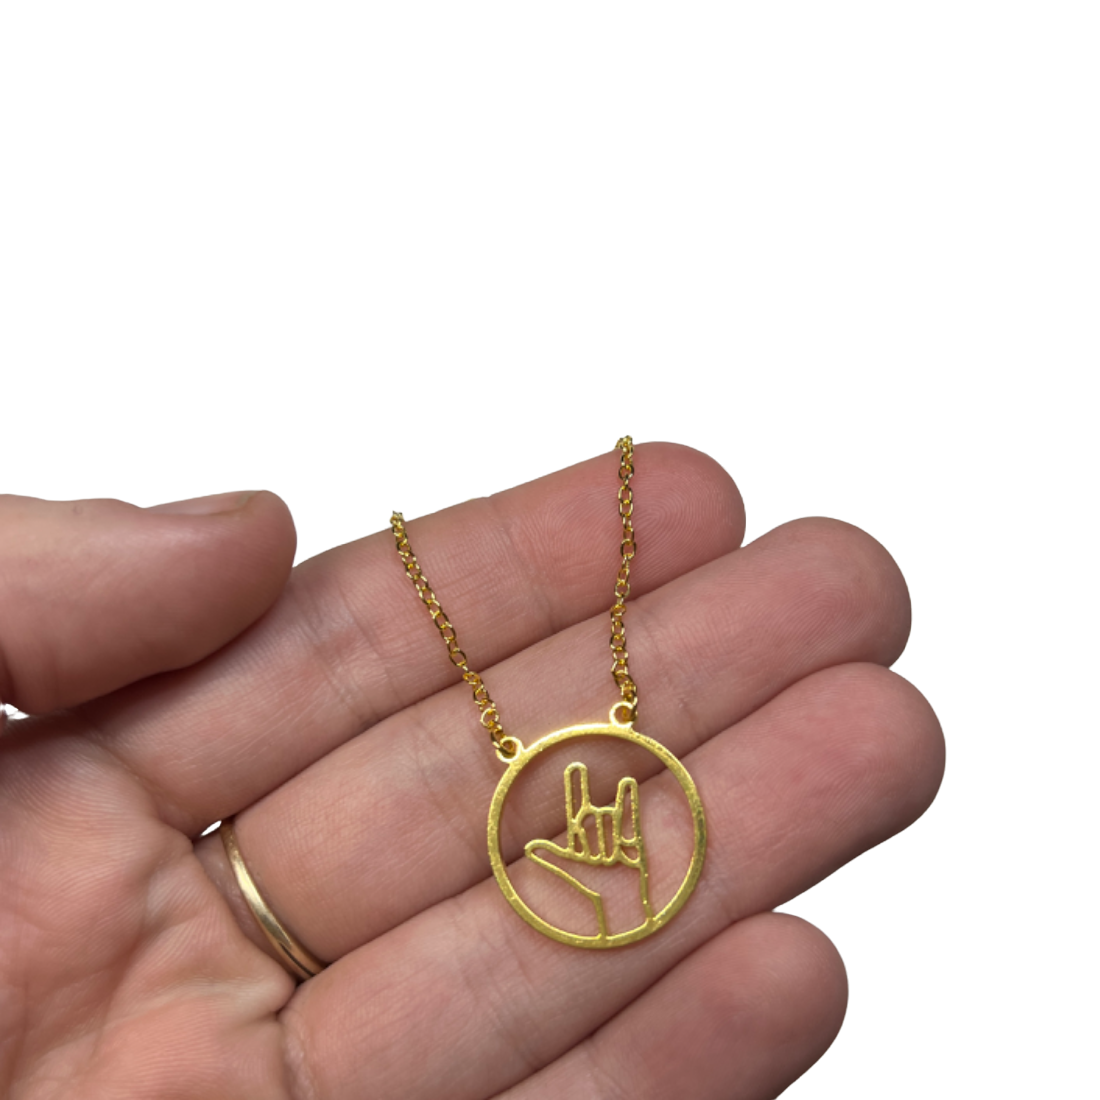 10k Gold Love You Heart Necklace | Heart necklace, Necklace, Shop necklaces